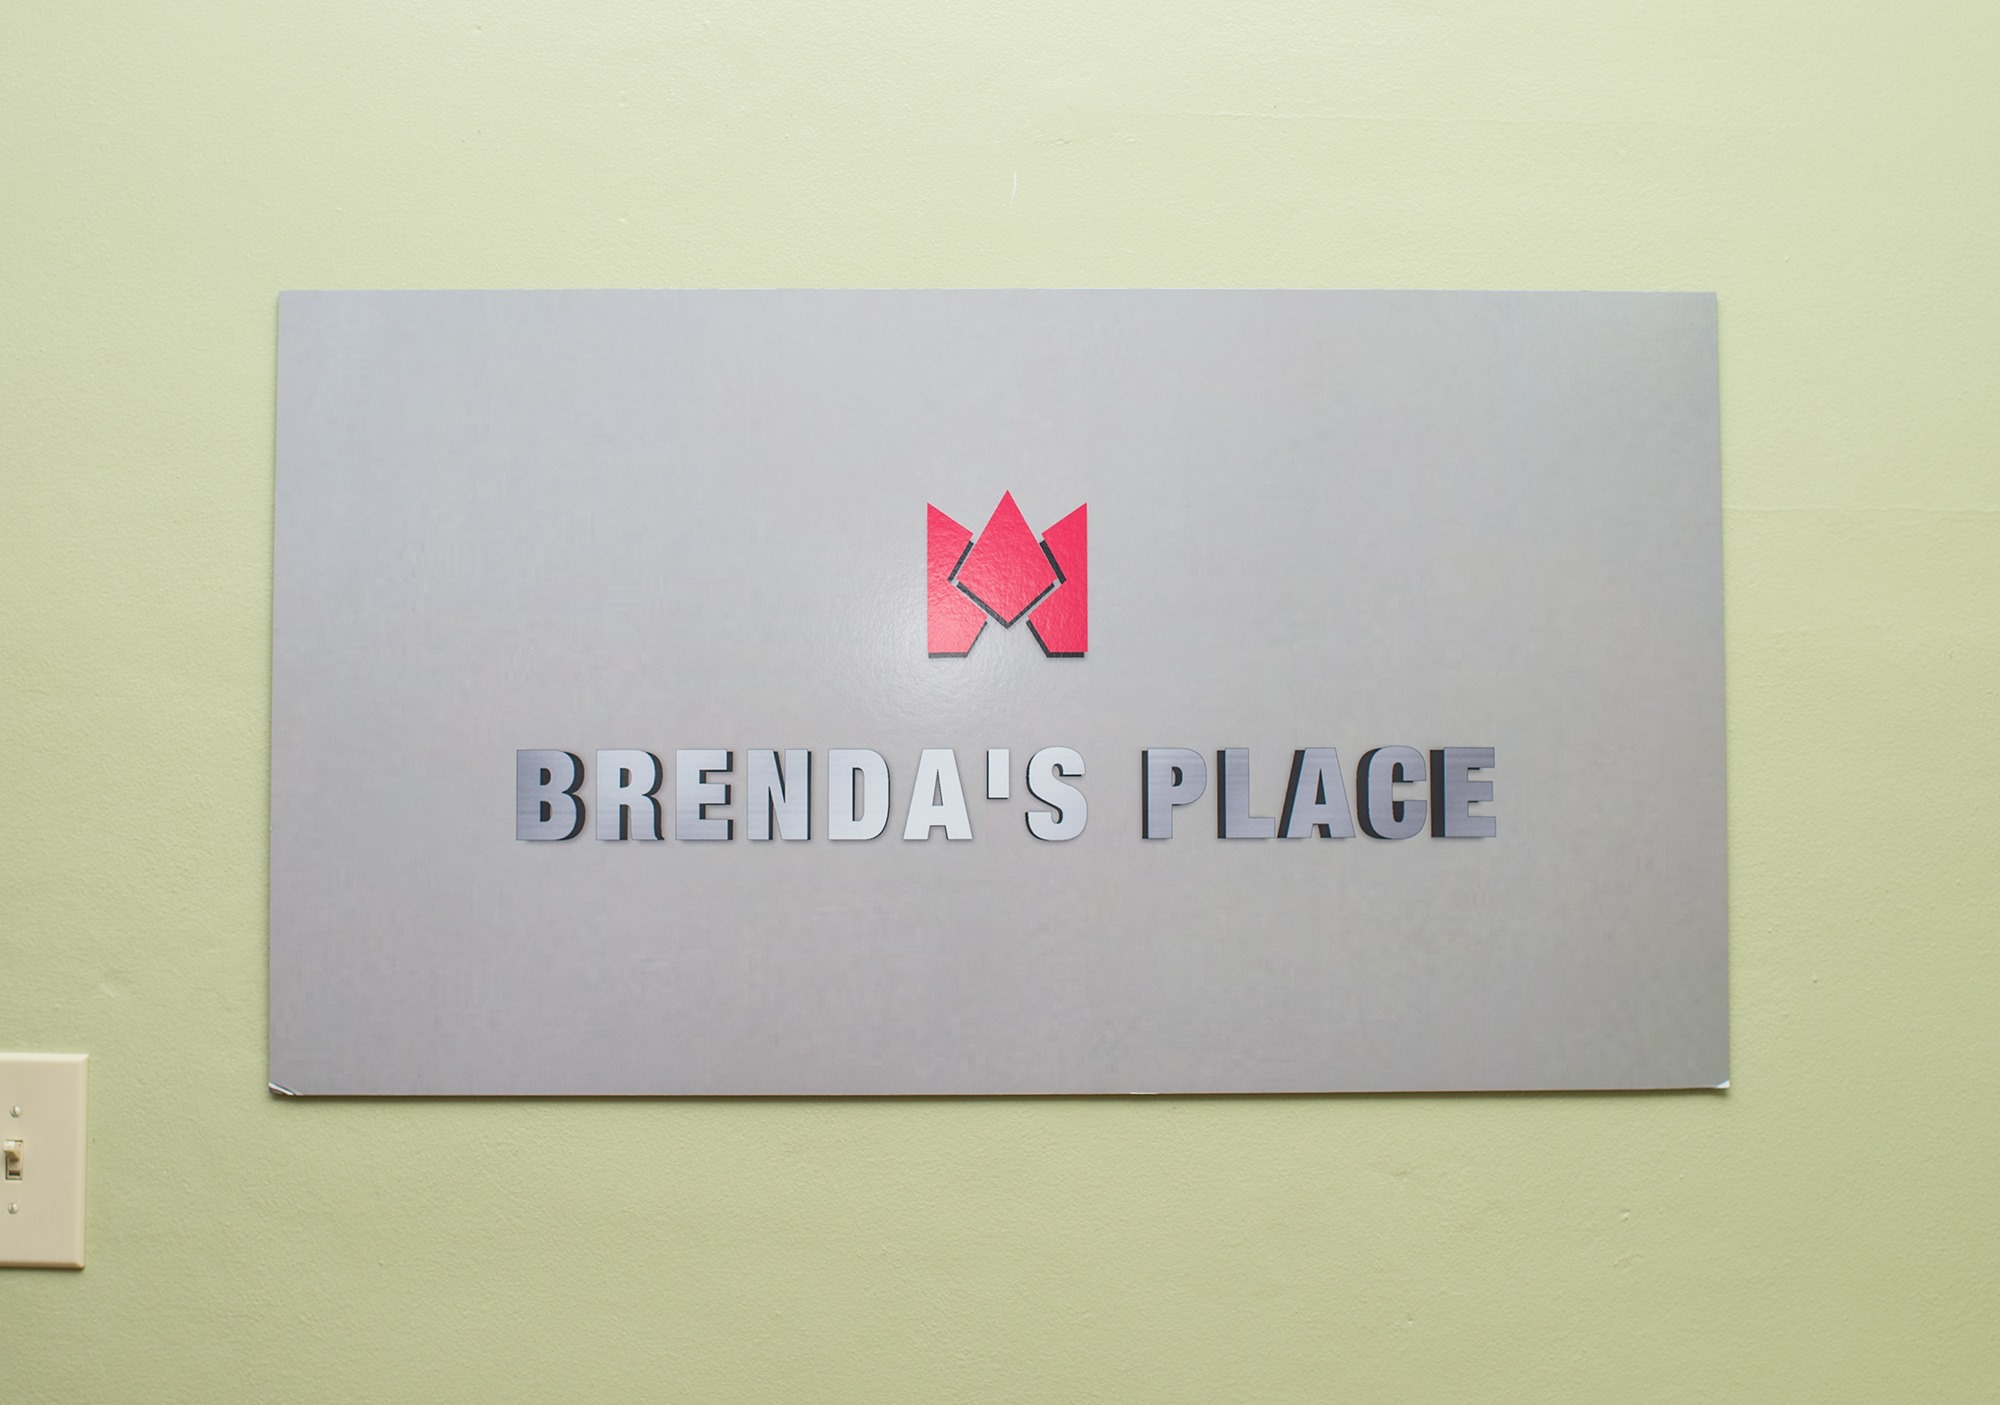 Brenda's Place